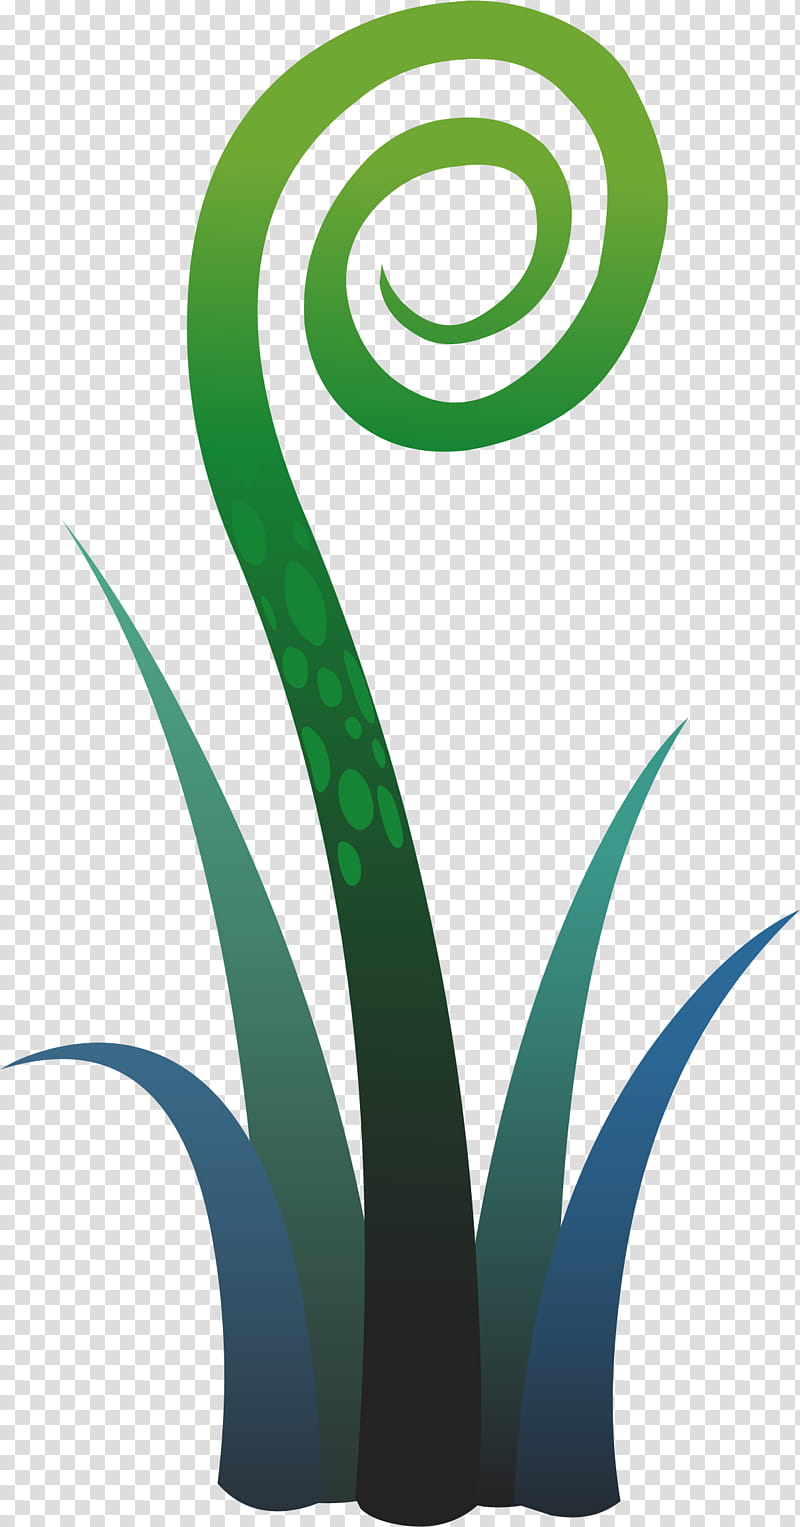 Green Leaf Logo, Fern, Plants, Vascular Plant, Tree Fern, Plant Stem, Grasses, Woody Plant transparent background PNG clipart